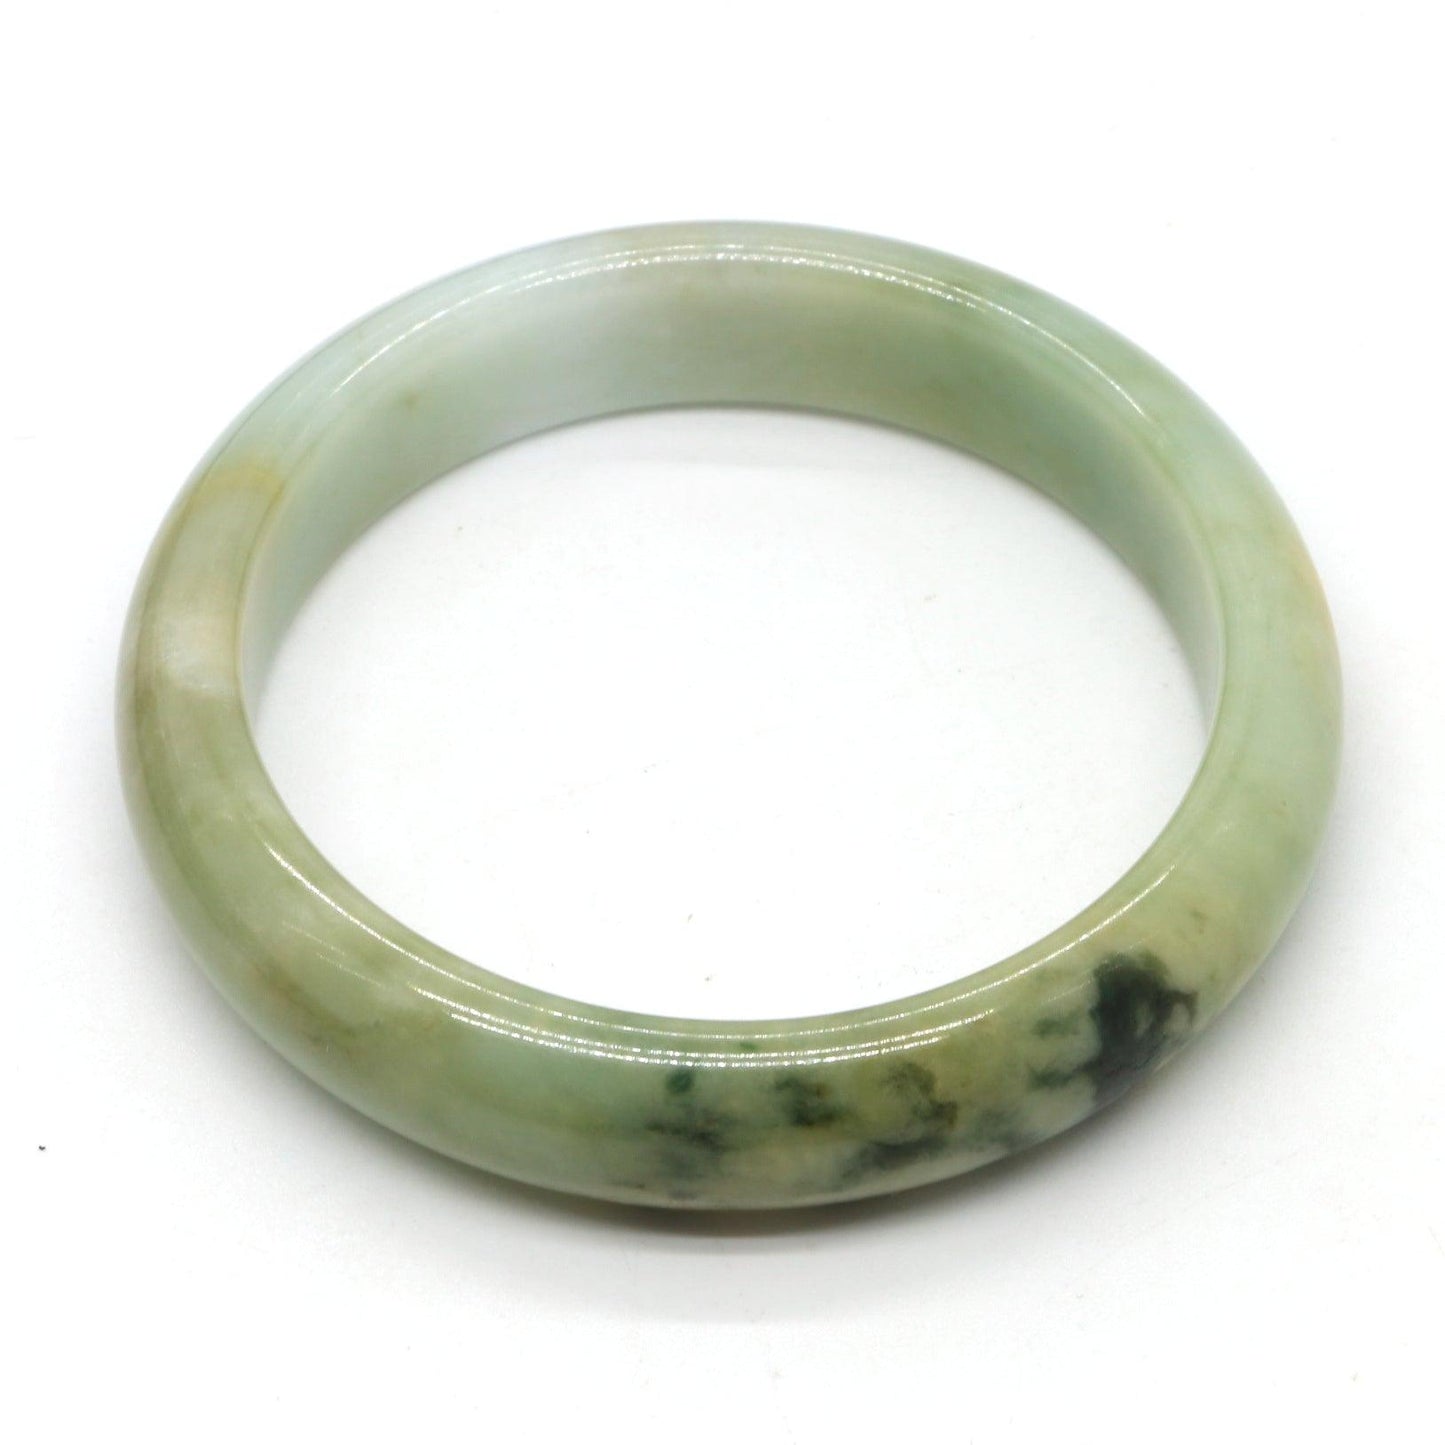 Type A Certified Jadeite Jade Bangle Size 56 -58mm B0BNBB52QW